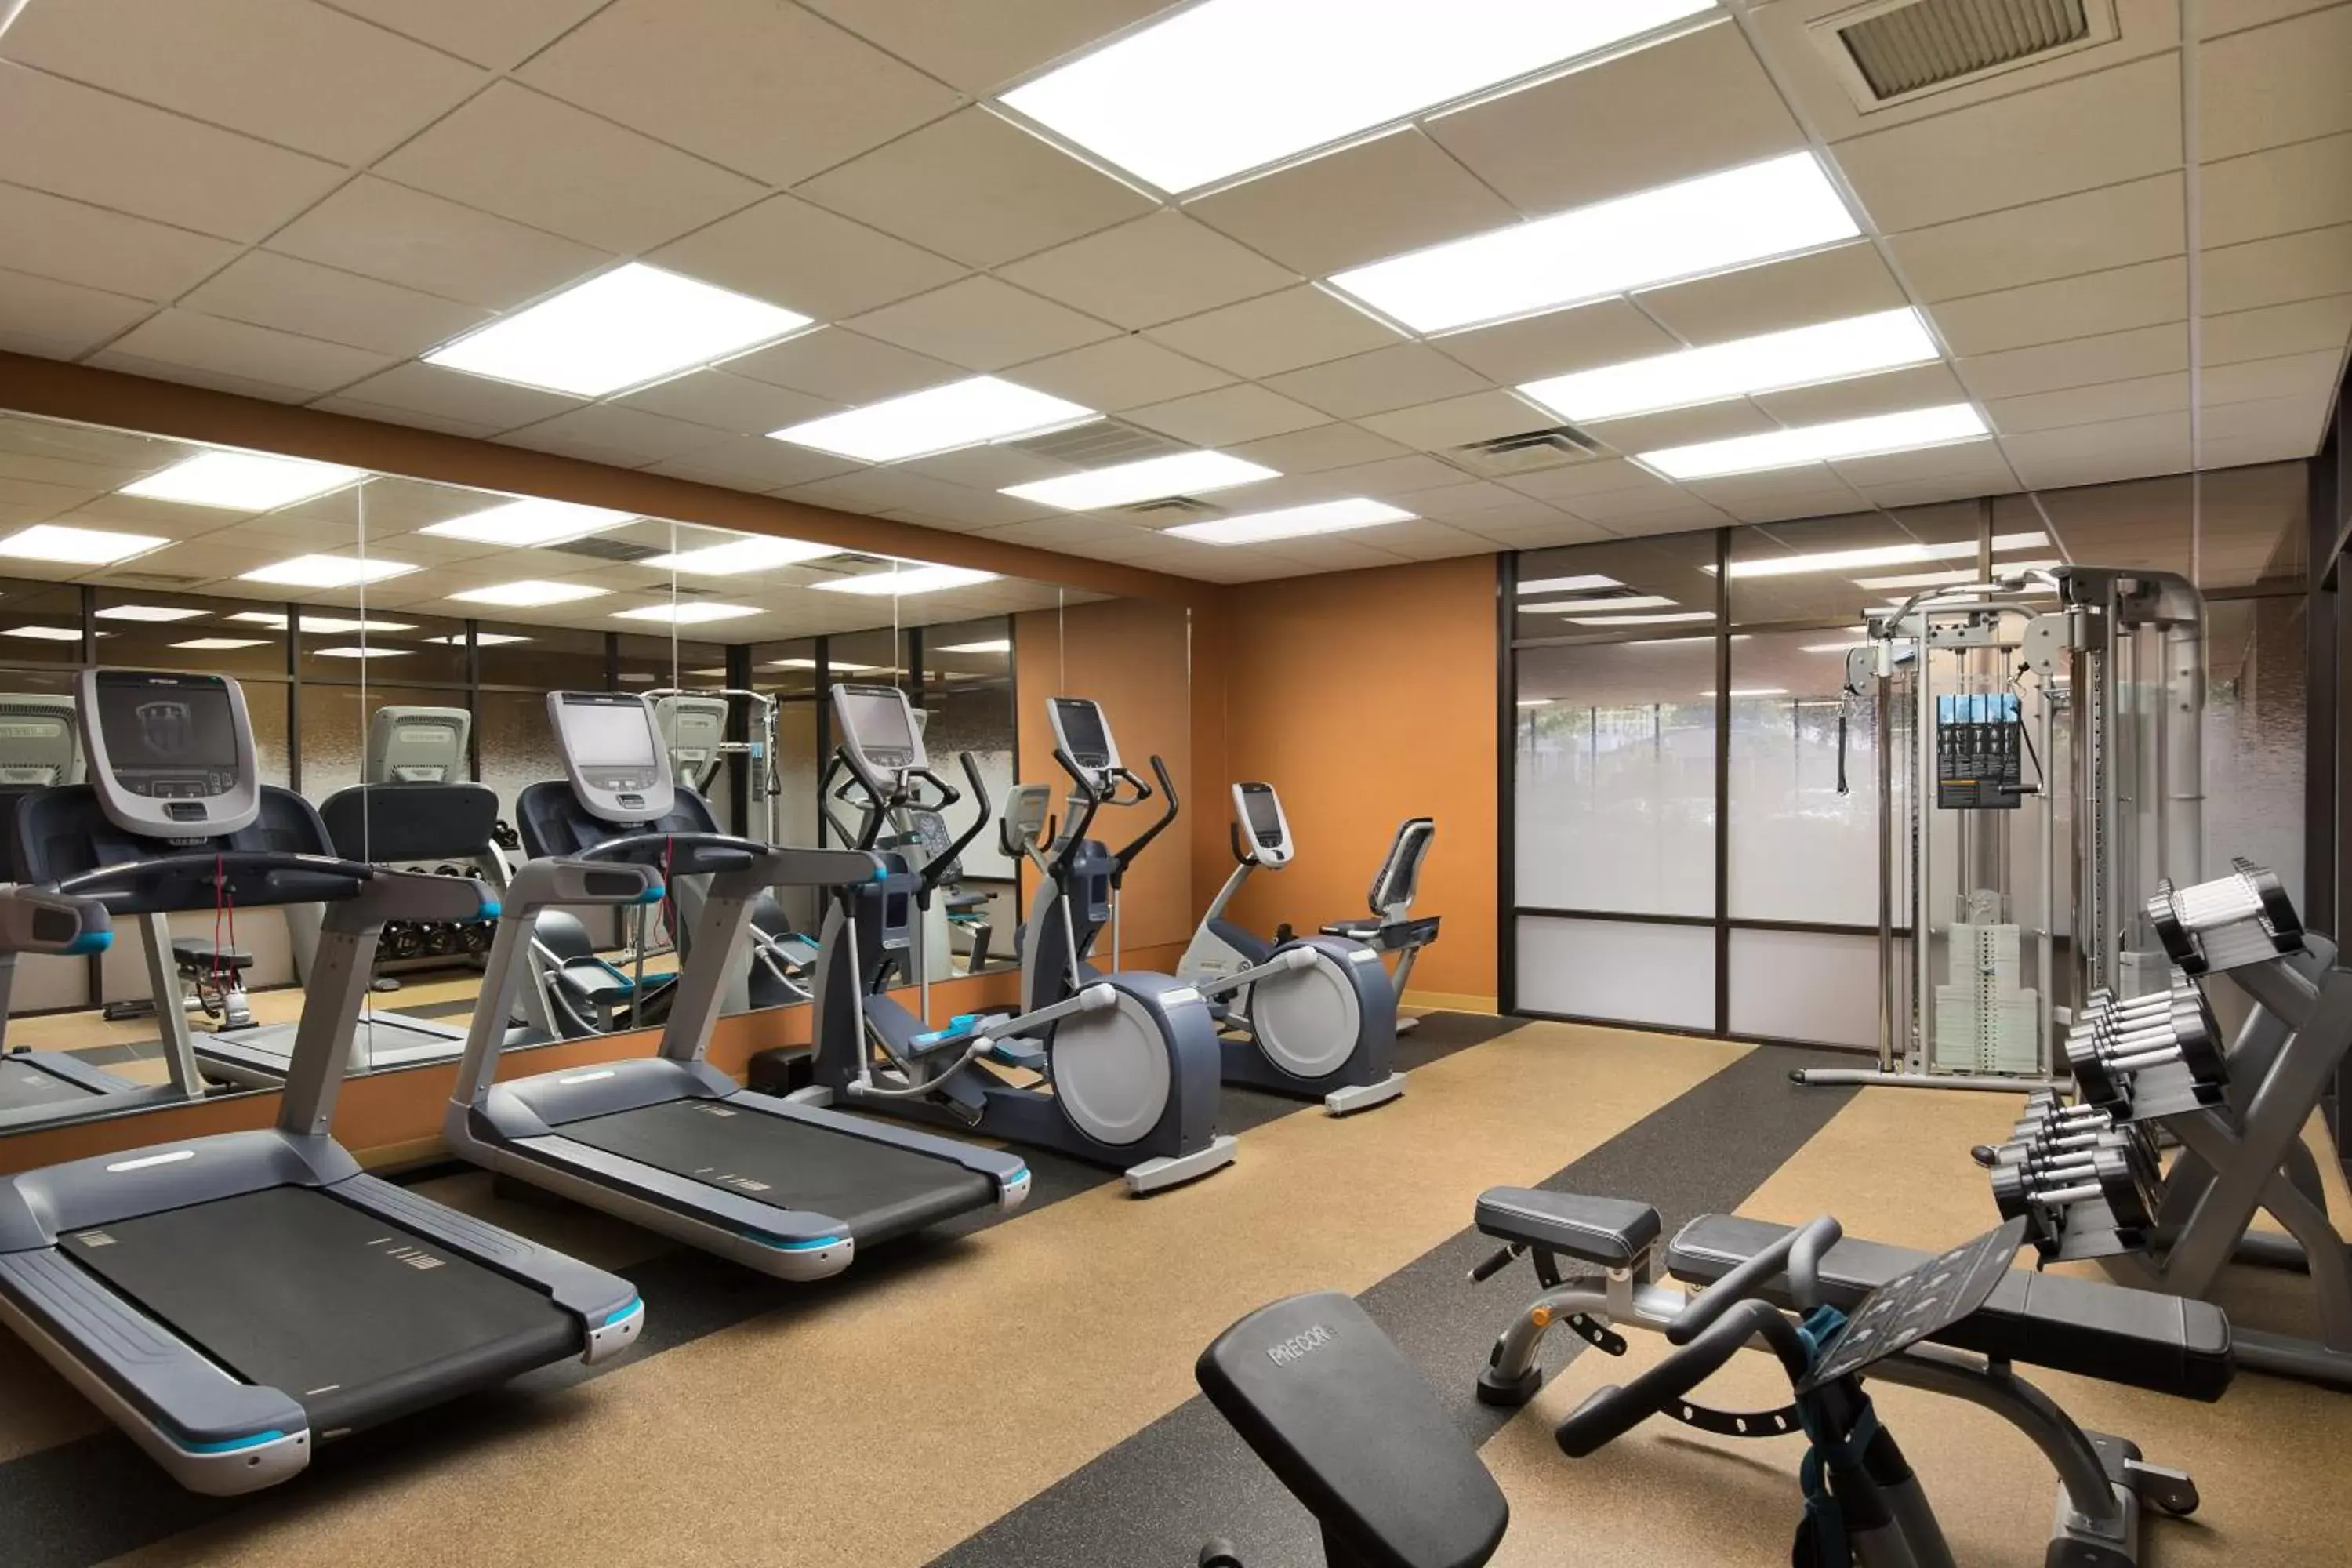 Fitness centre/facilities, Fitness Center/Facilities in University Plaza Hotel